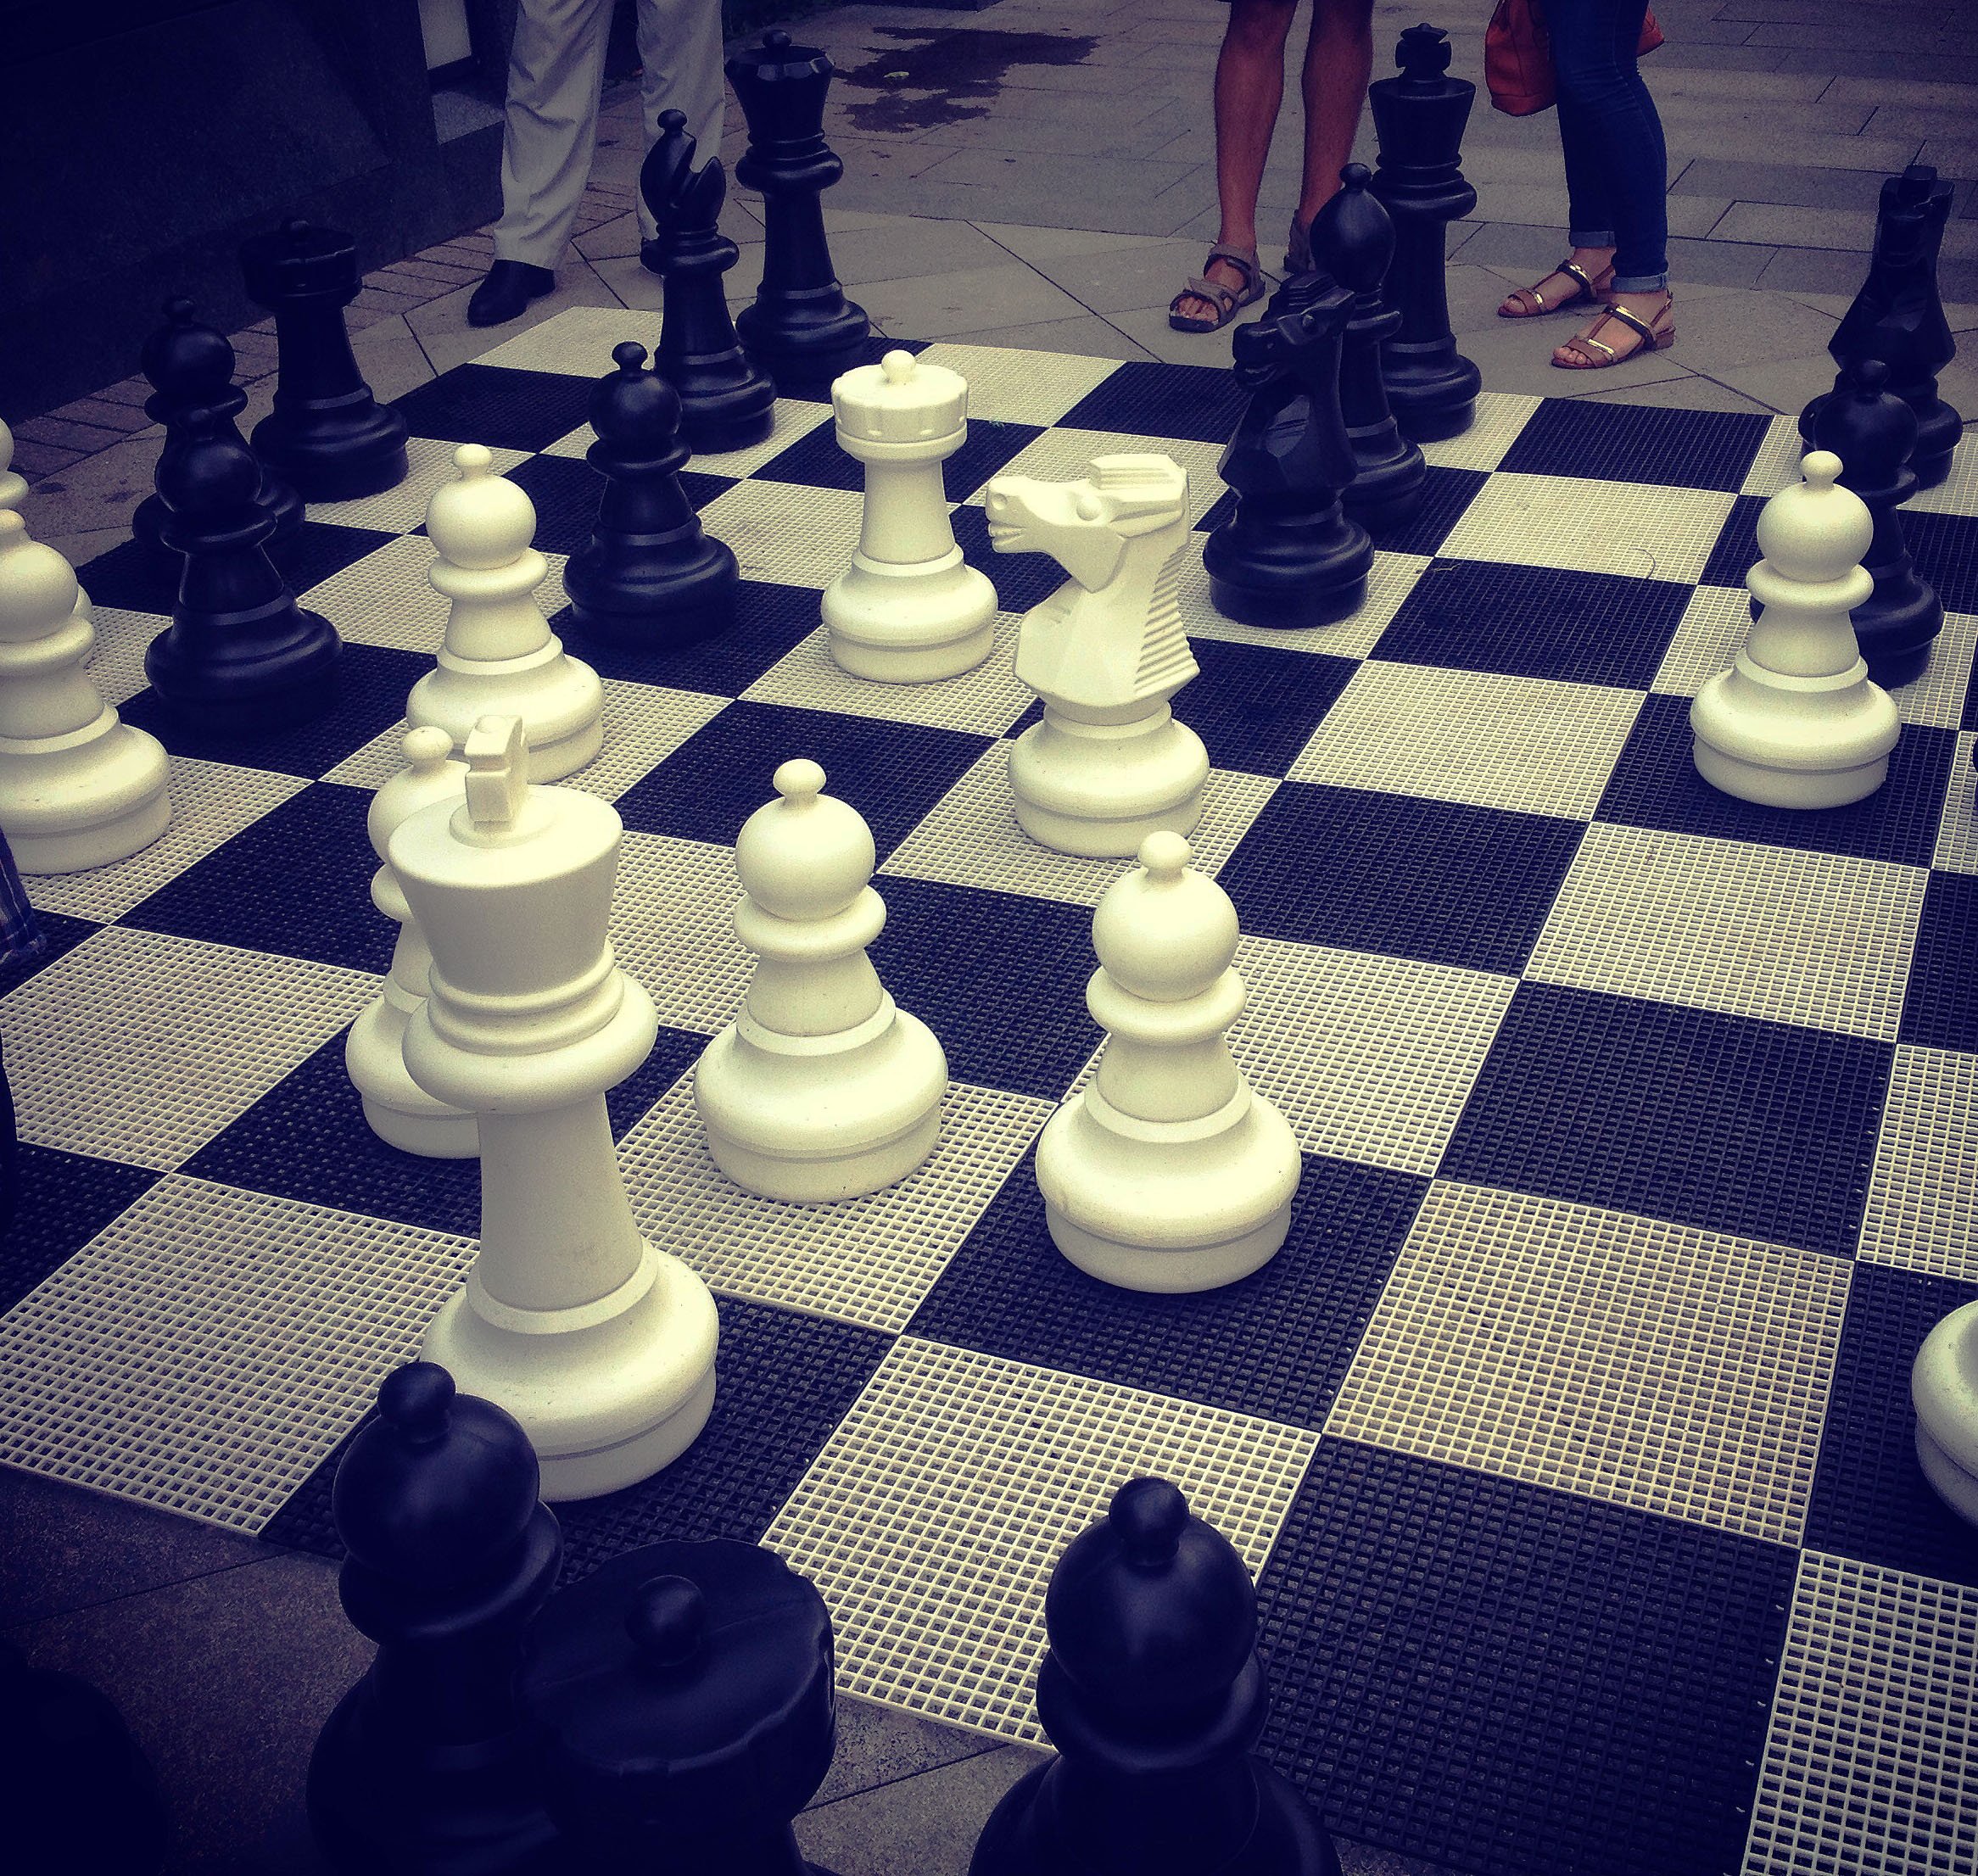 На шахматной доске 64 клетки поля. Шахматы. Шахматы на улице. Большие шахматы на улице. Шахматы на улице в Москве.